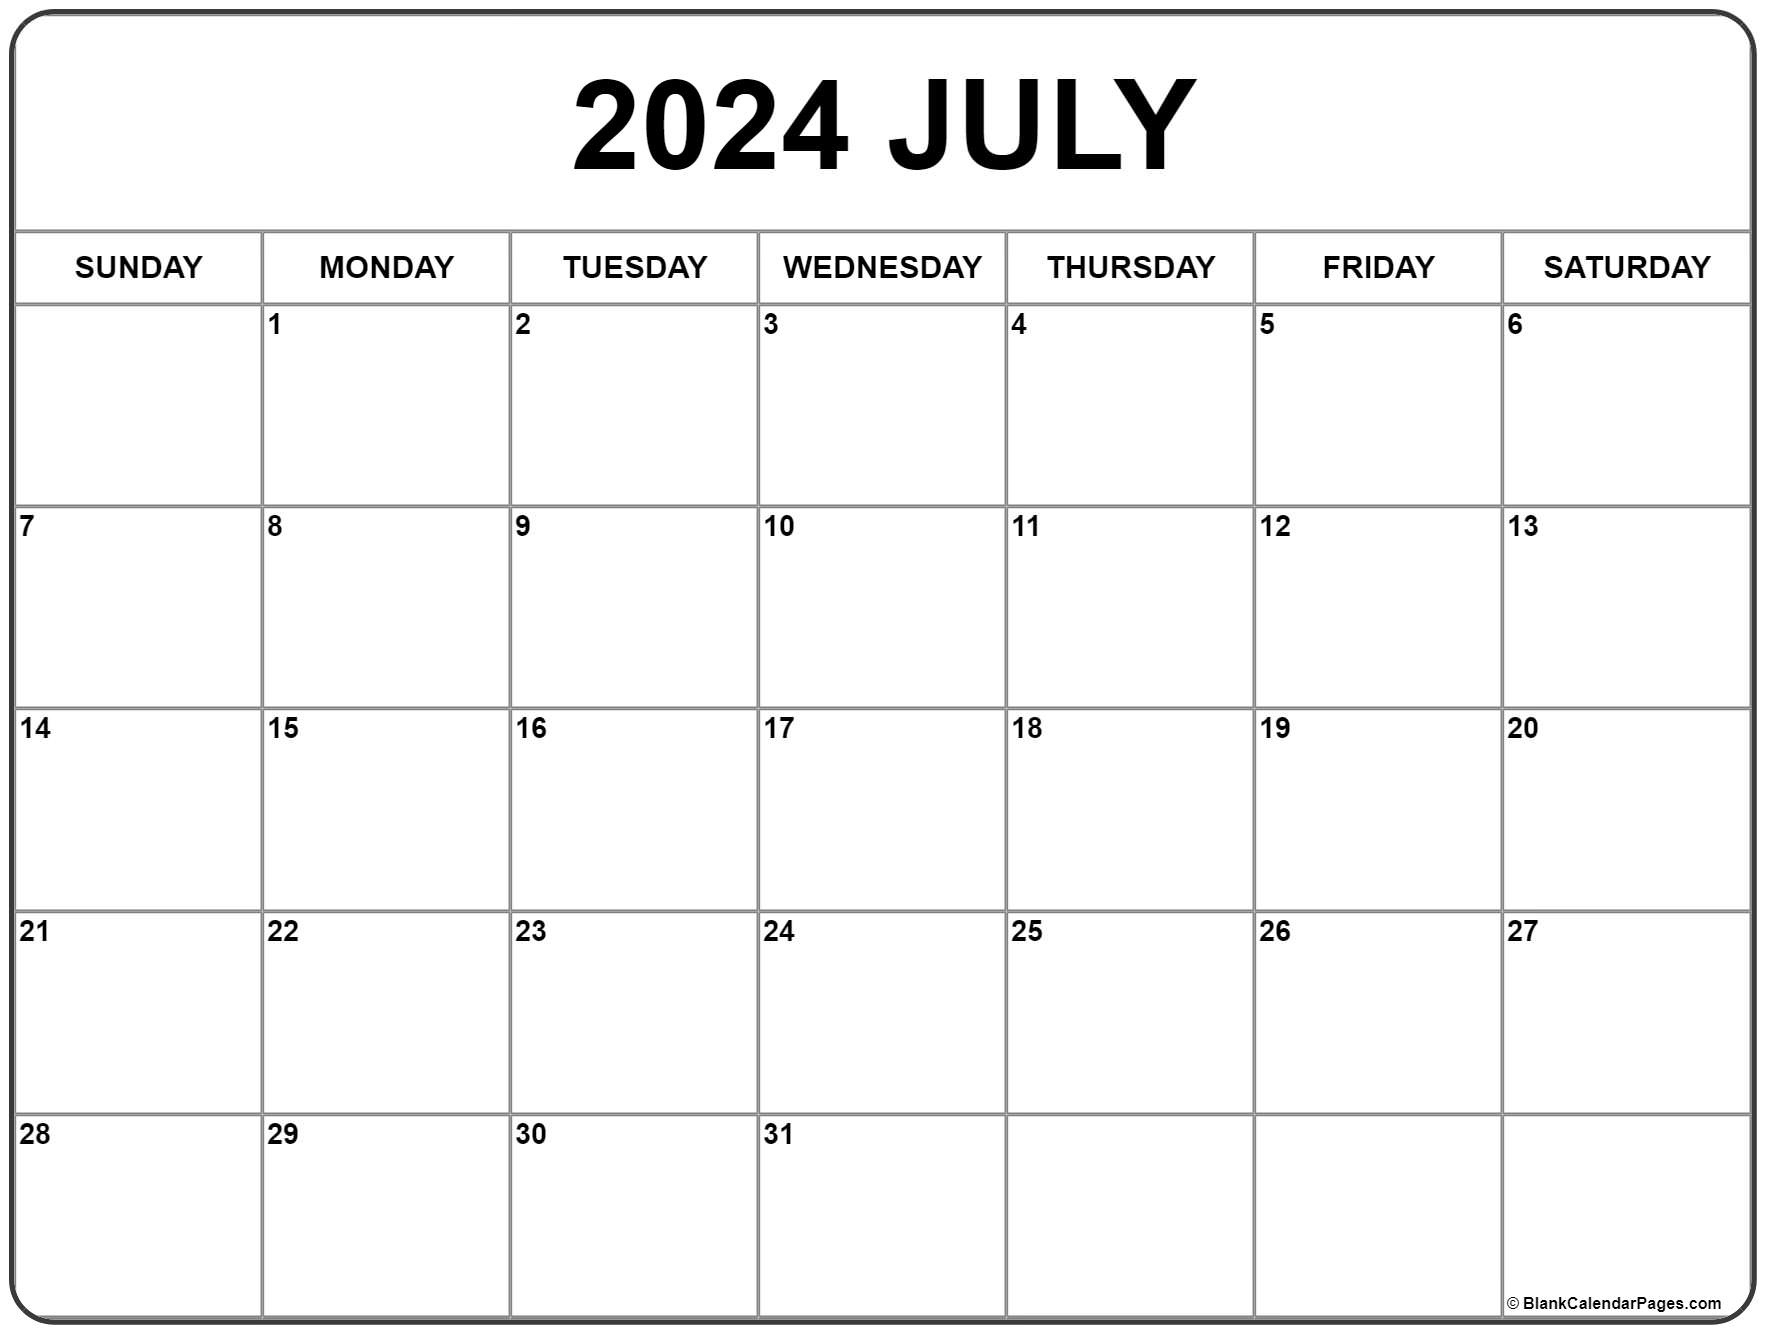 July 2024 Calendar | Free Printable Calendar intended for Free Printable Calendar 2024 Schedule